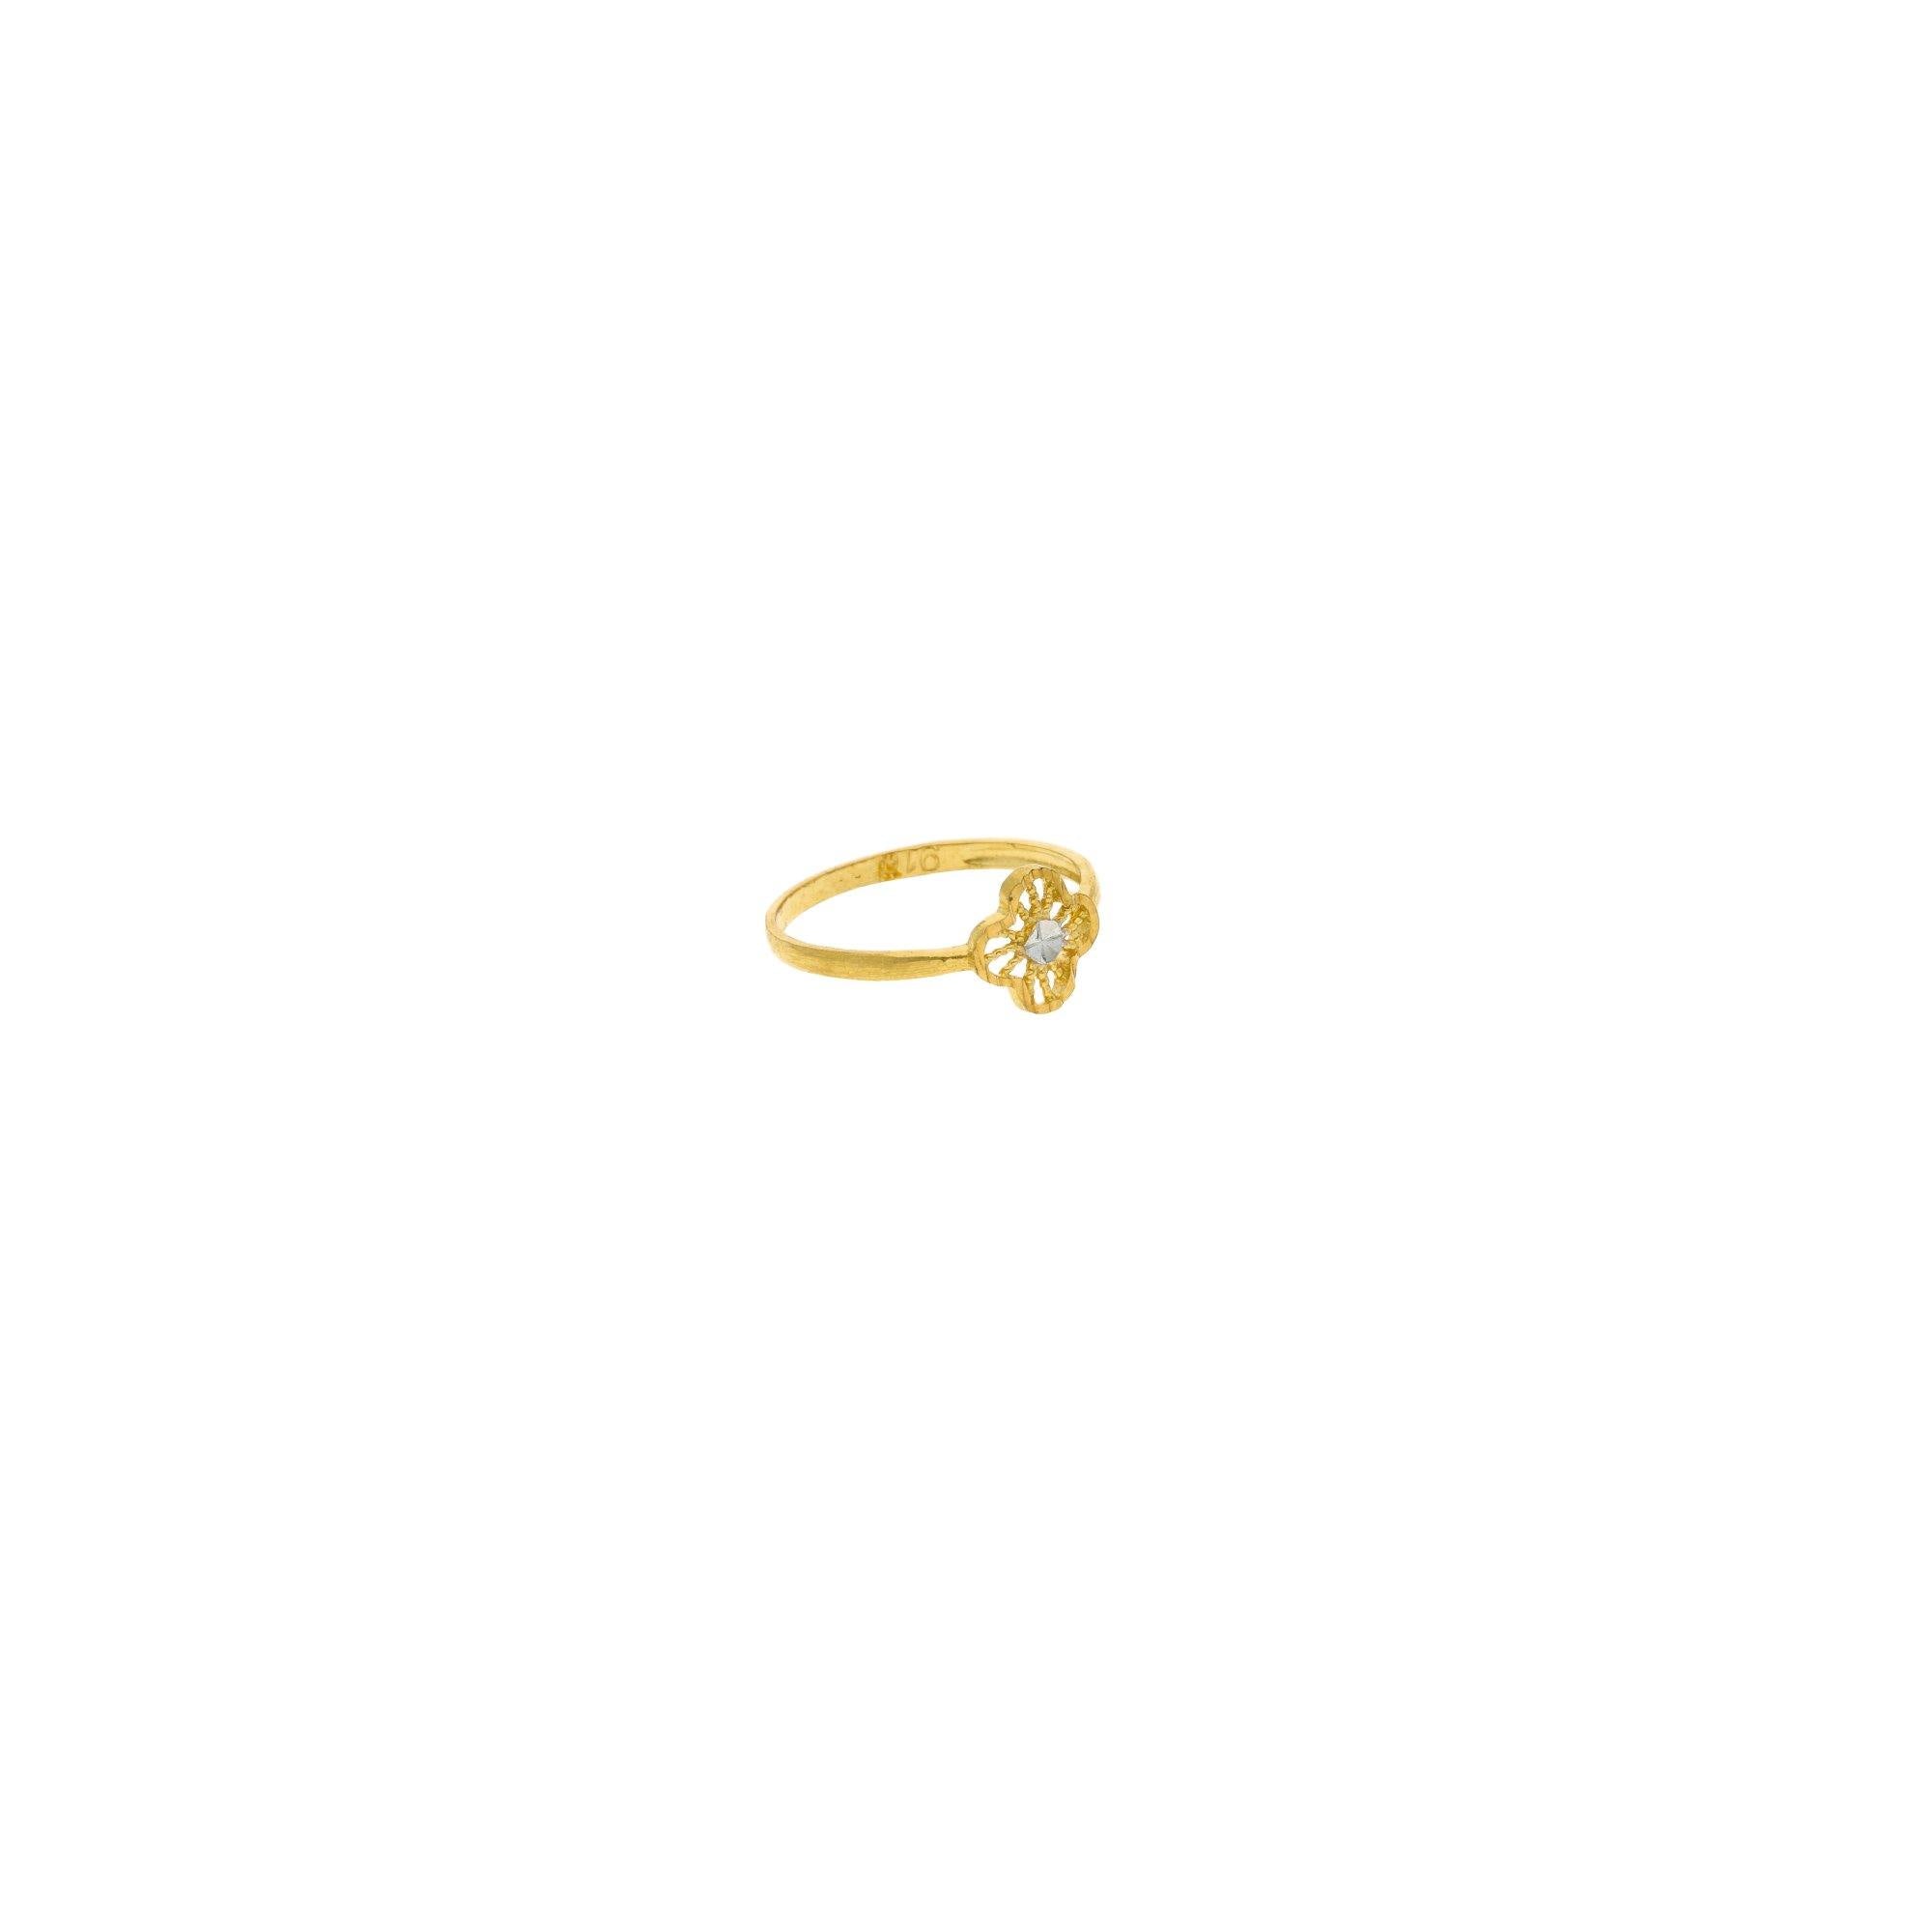 99% 3.2gm Ladies Gold Ring at best price in Kolkata | ID: 2852038840230